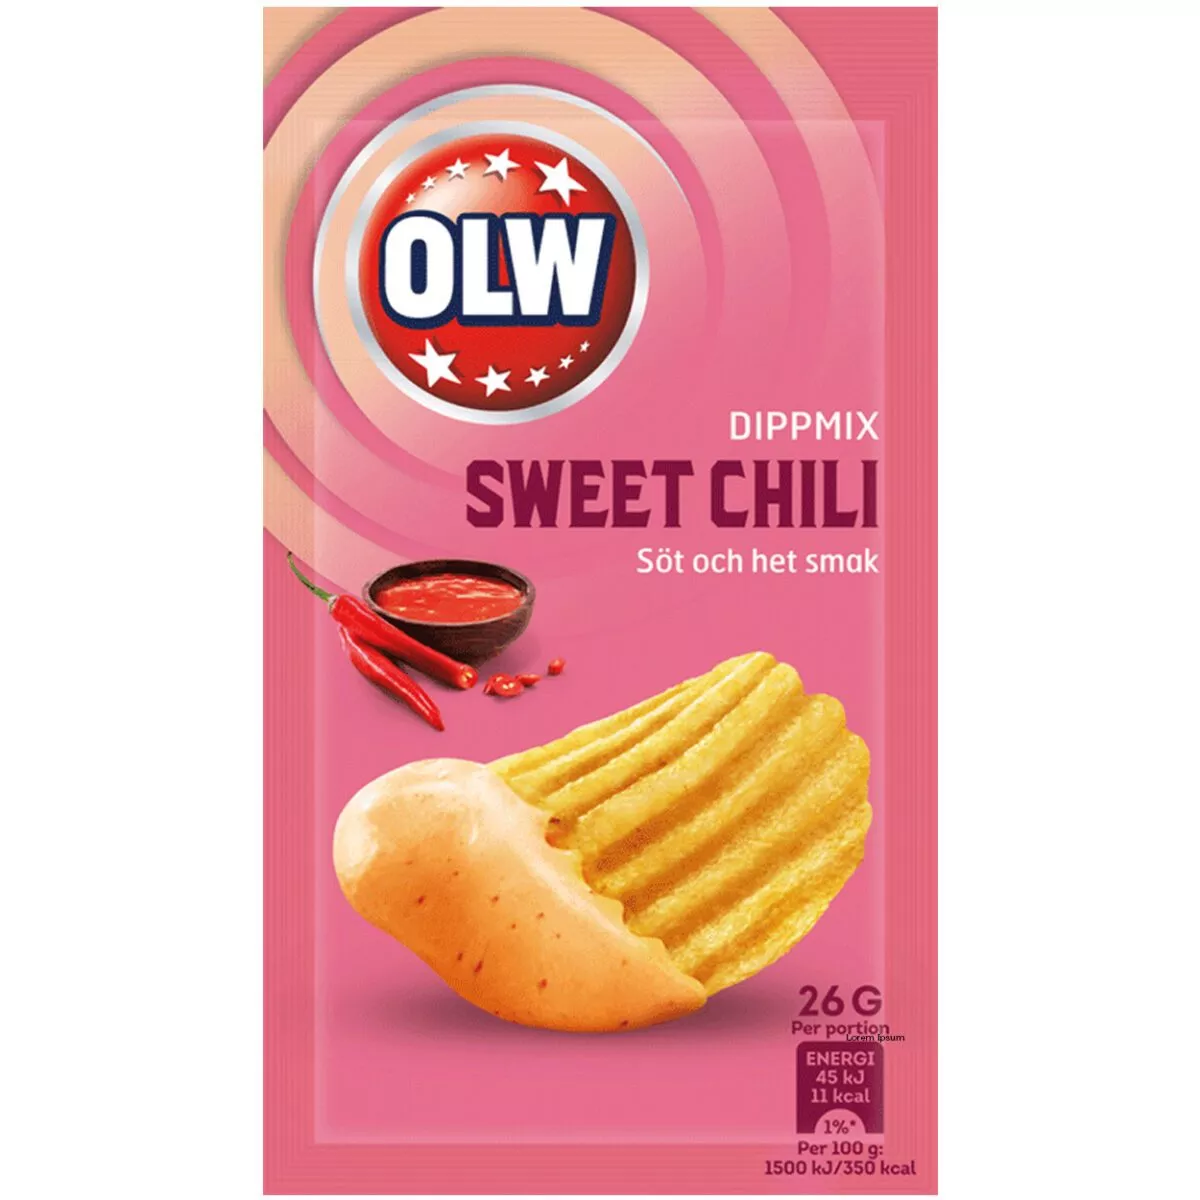 OLW Sweet Chili-Dippmix (26g) 1